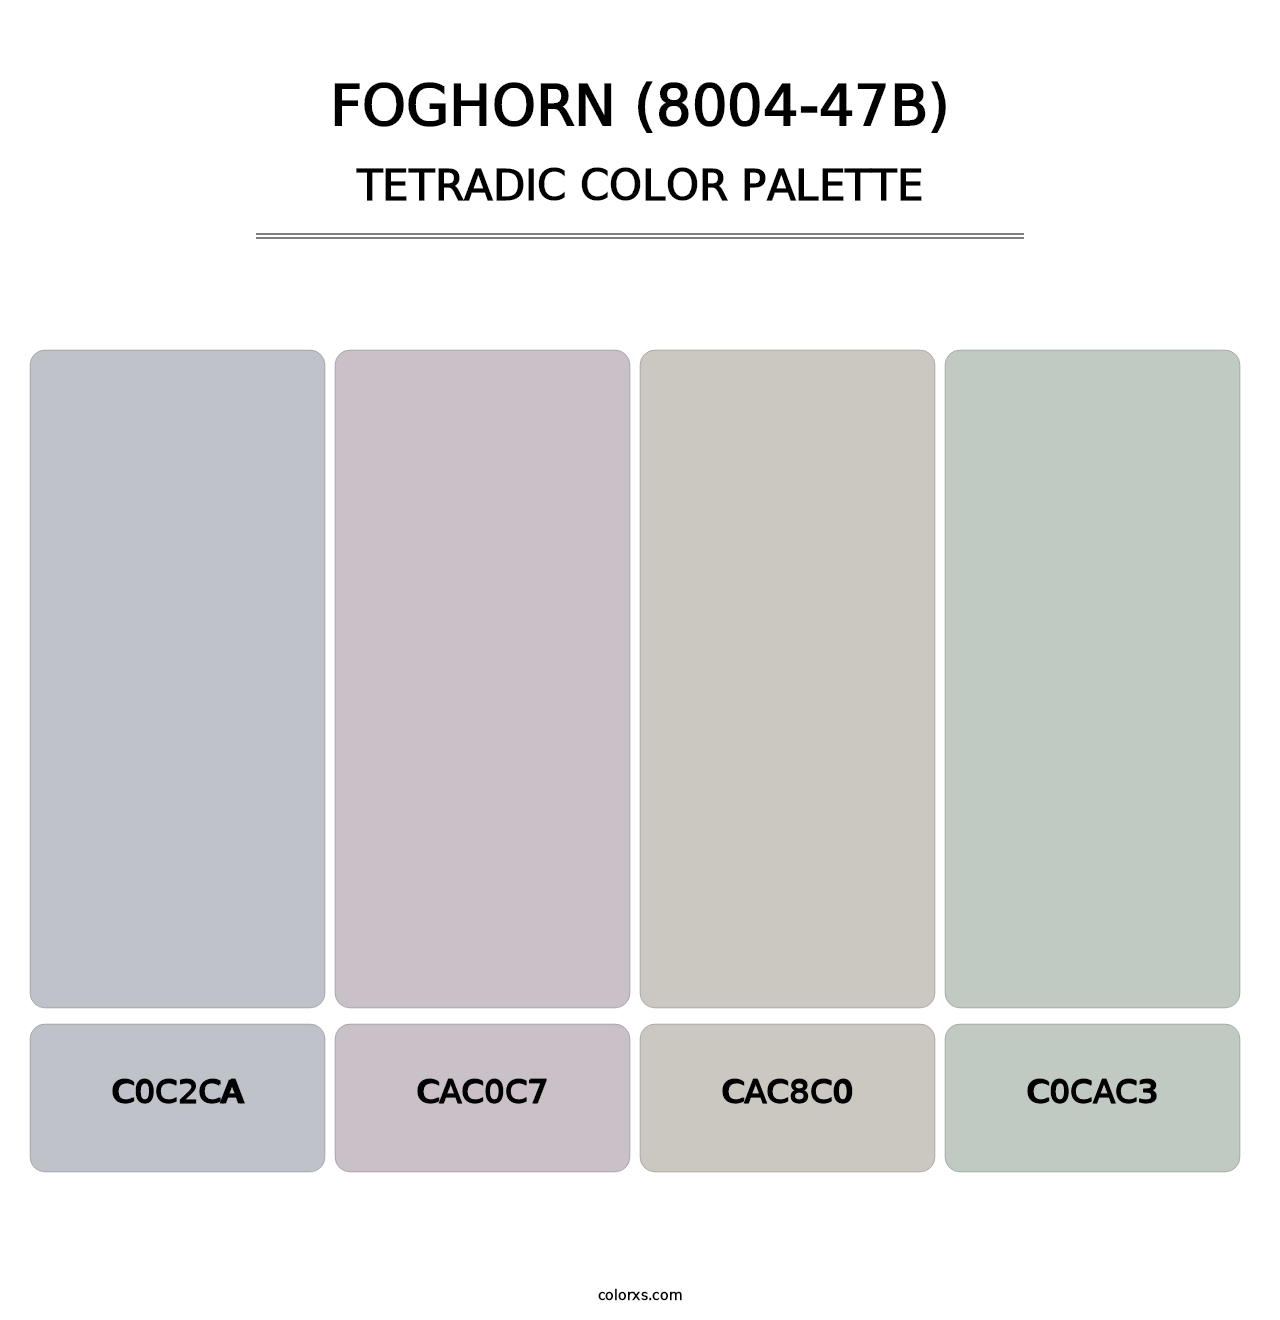 Foghorn (8004-47B) - Tetradic Color Palette